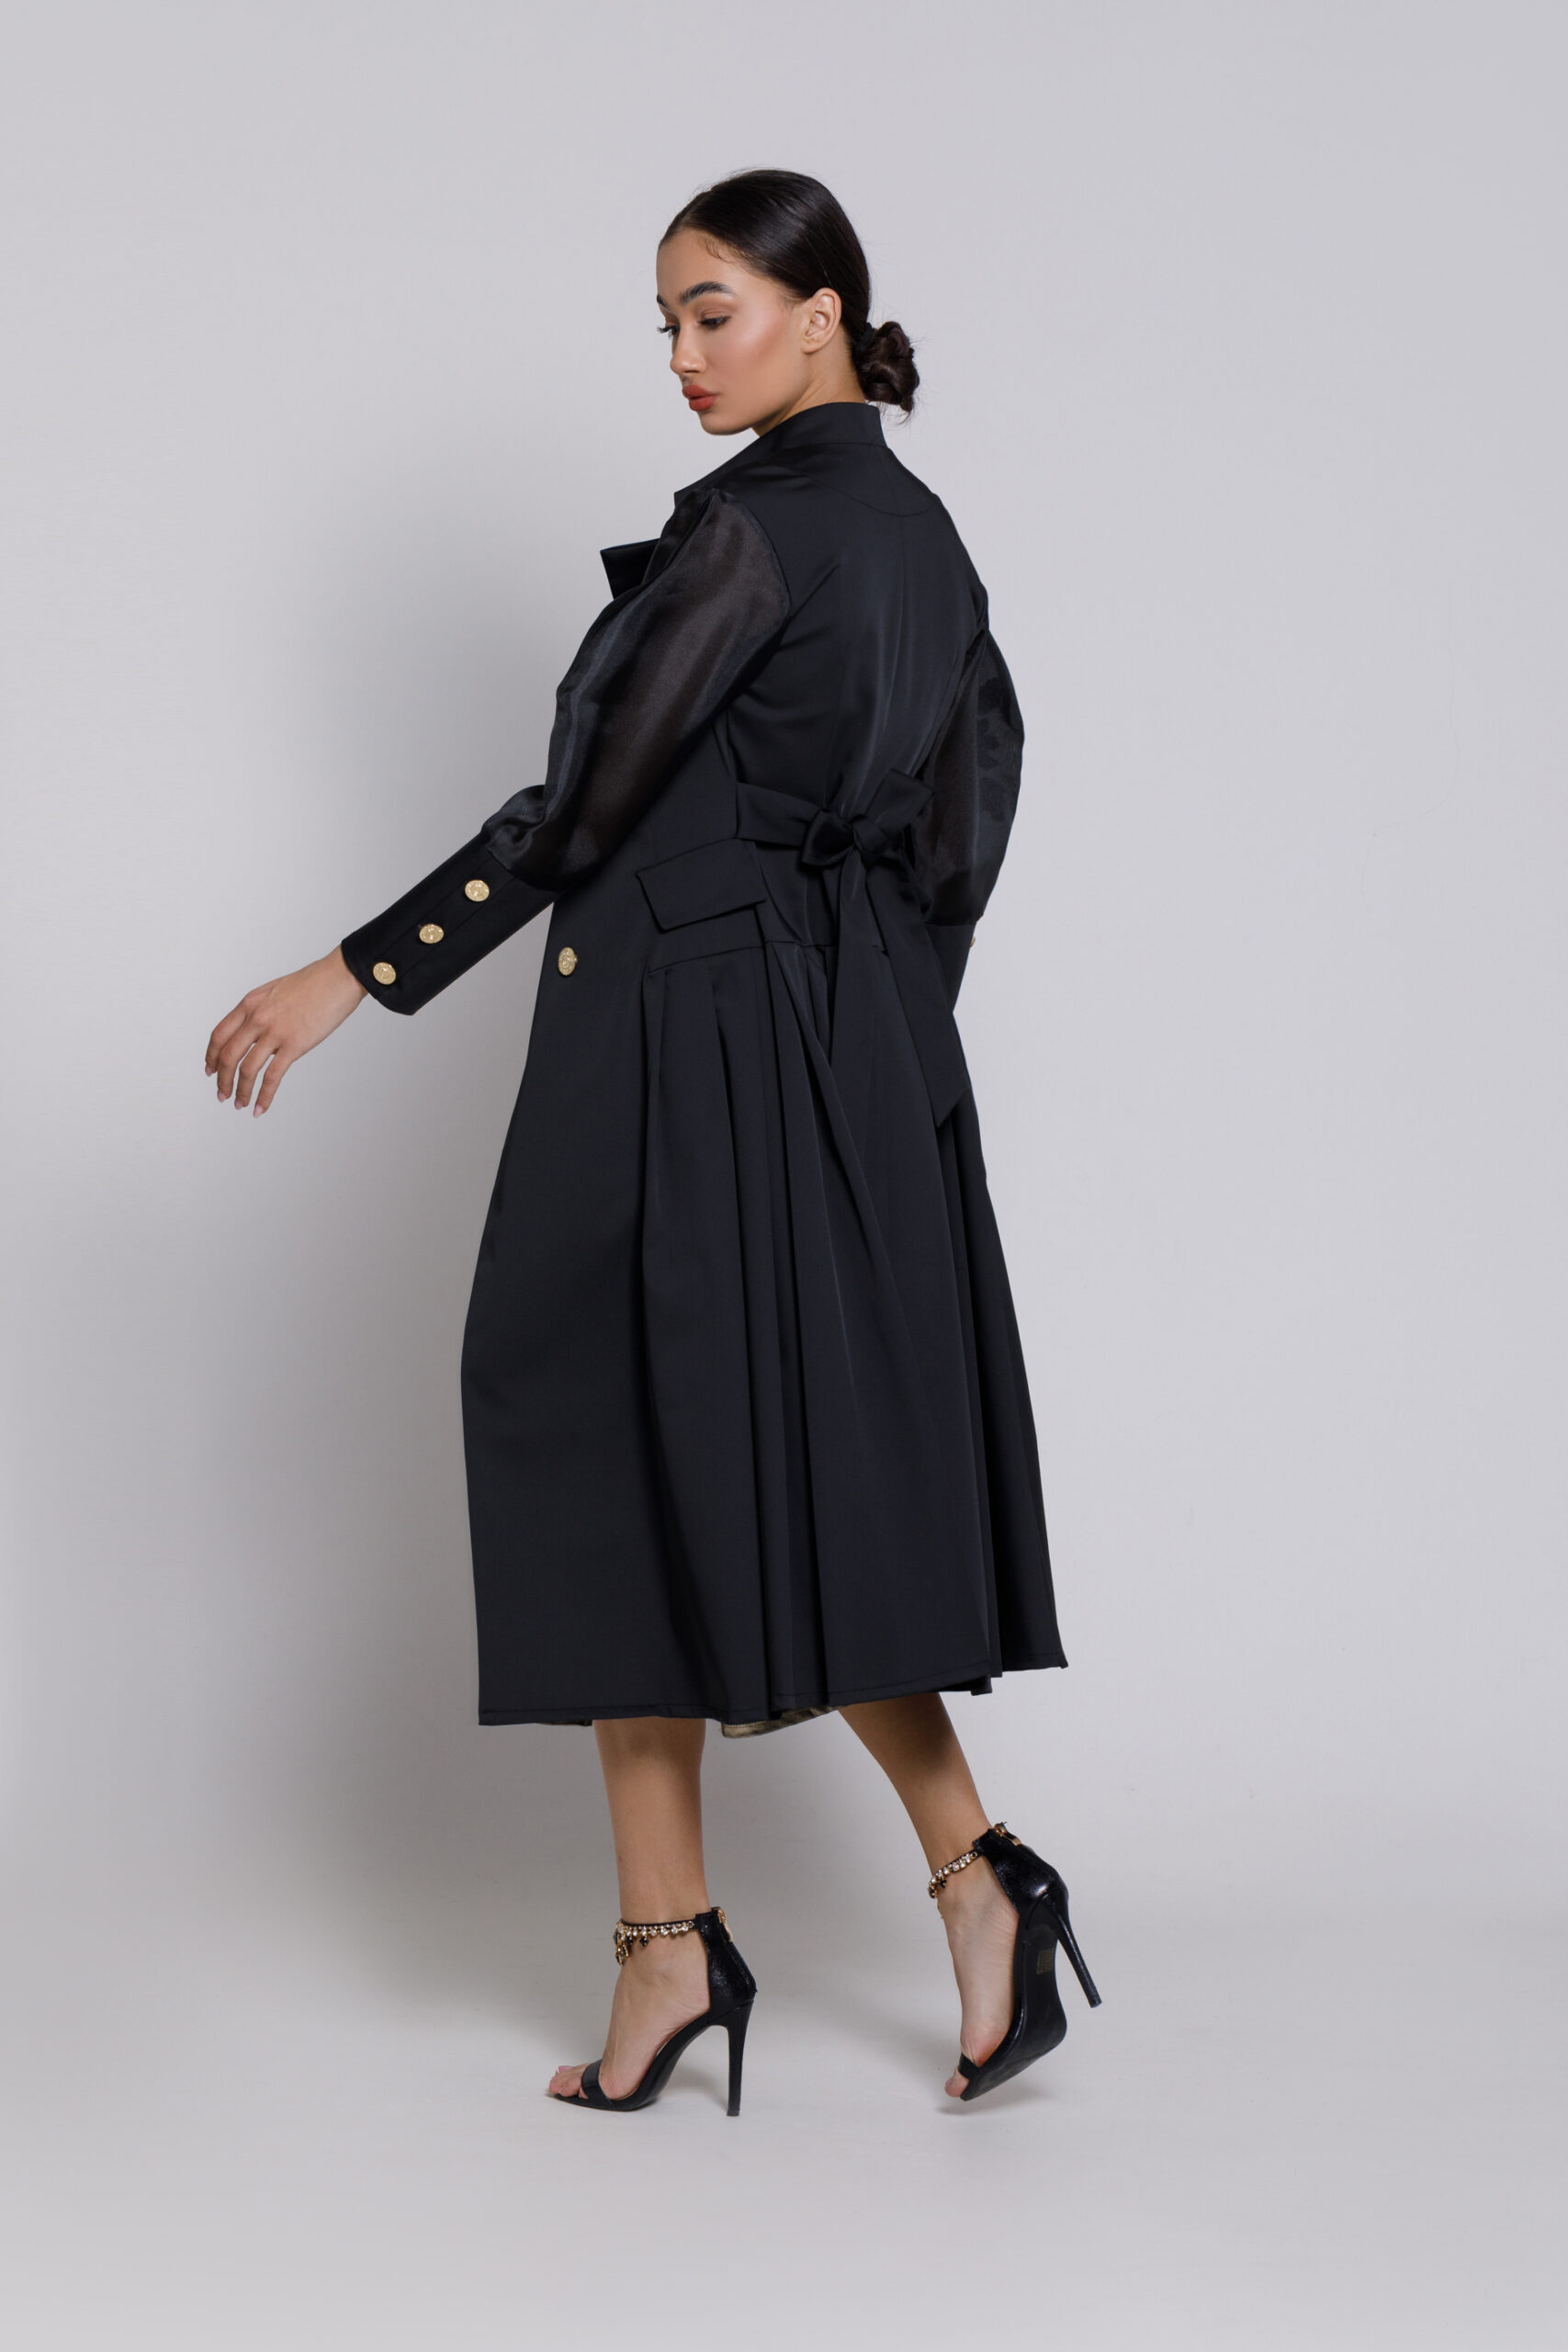 Dress/Overcoat MILENA made of tercot with organza sleeves. Natural fabrics, original design, handmade embroidery